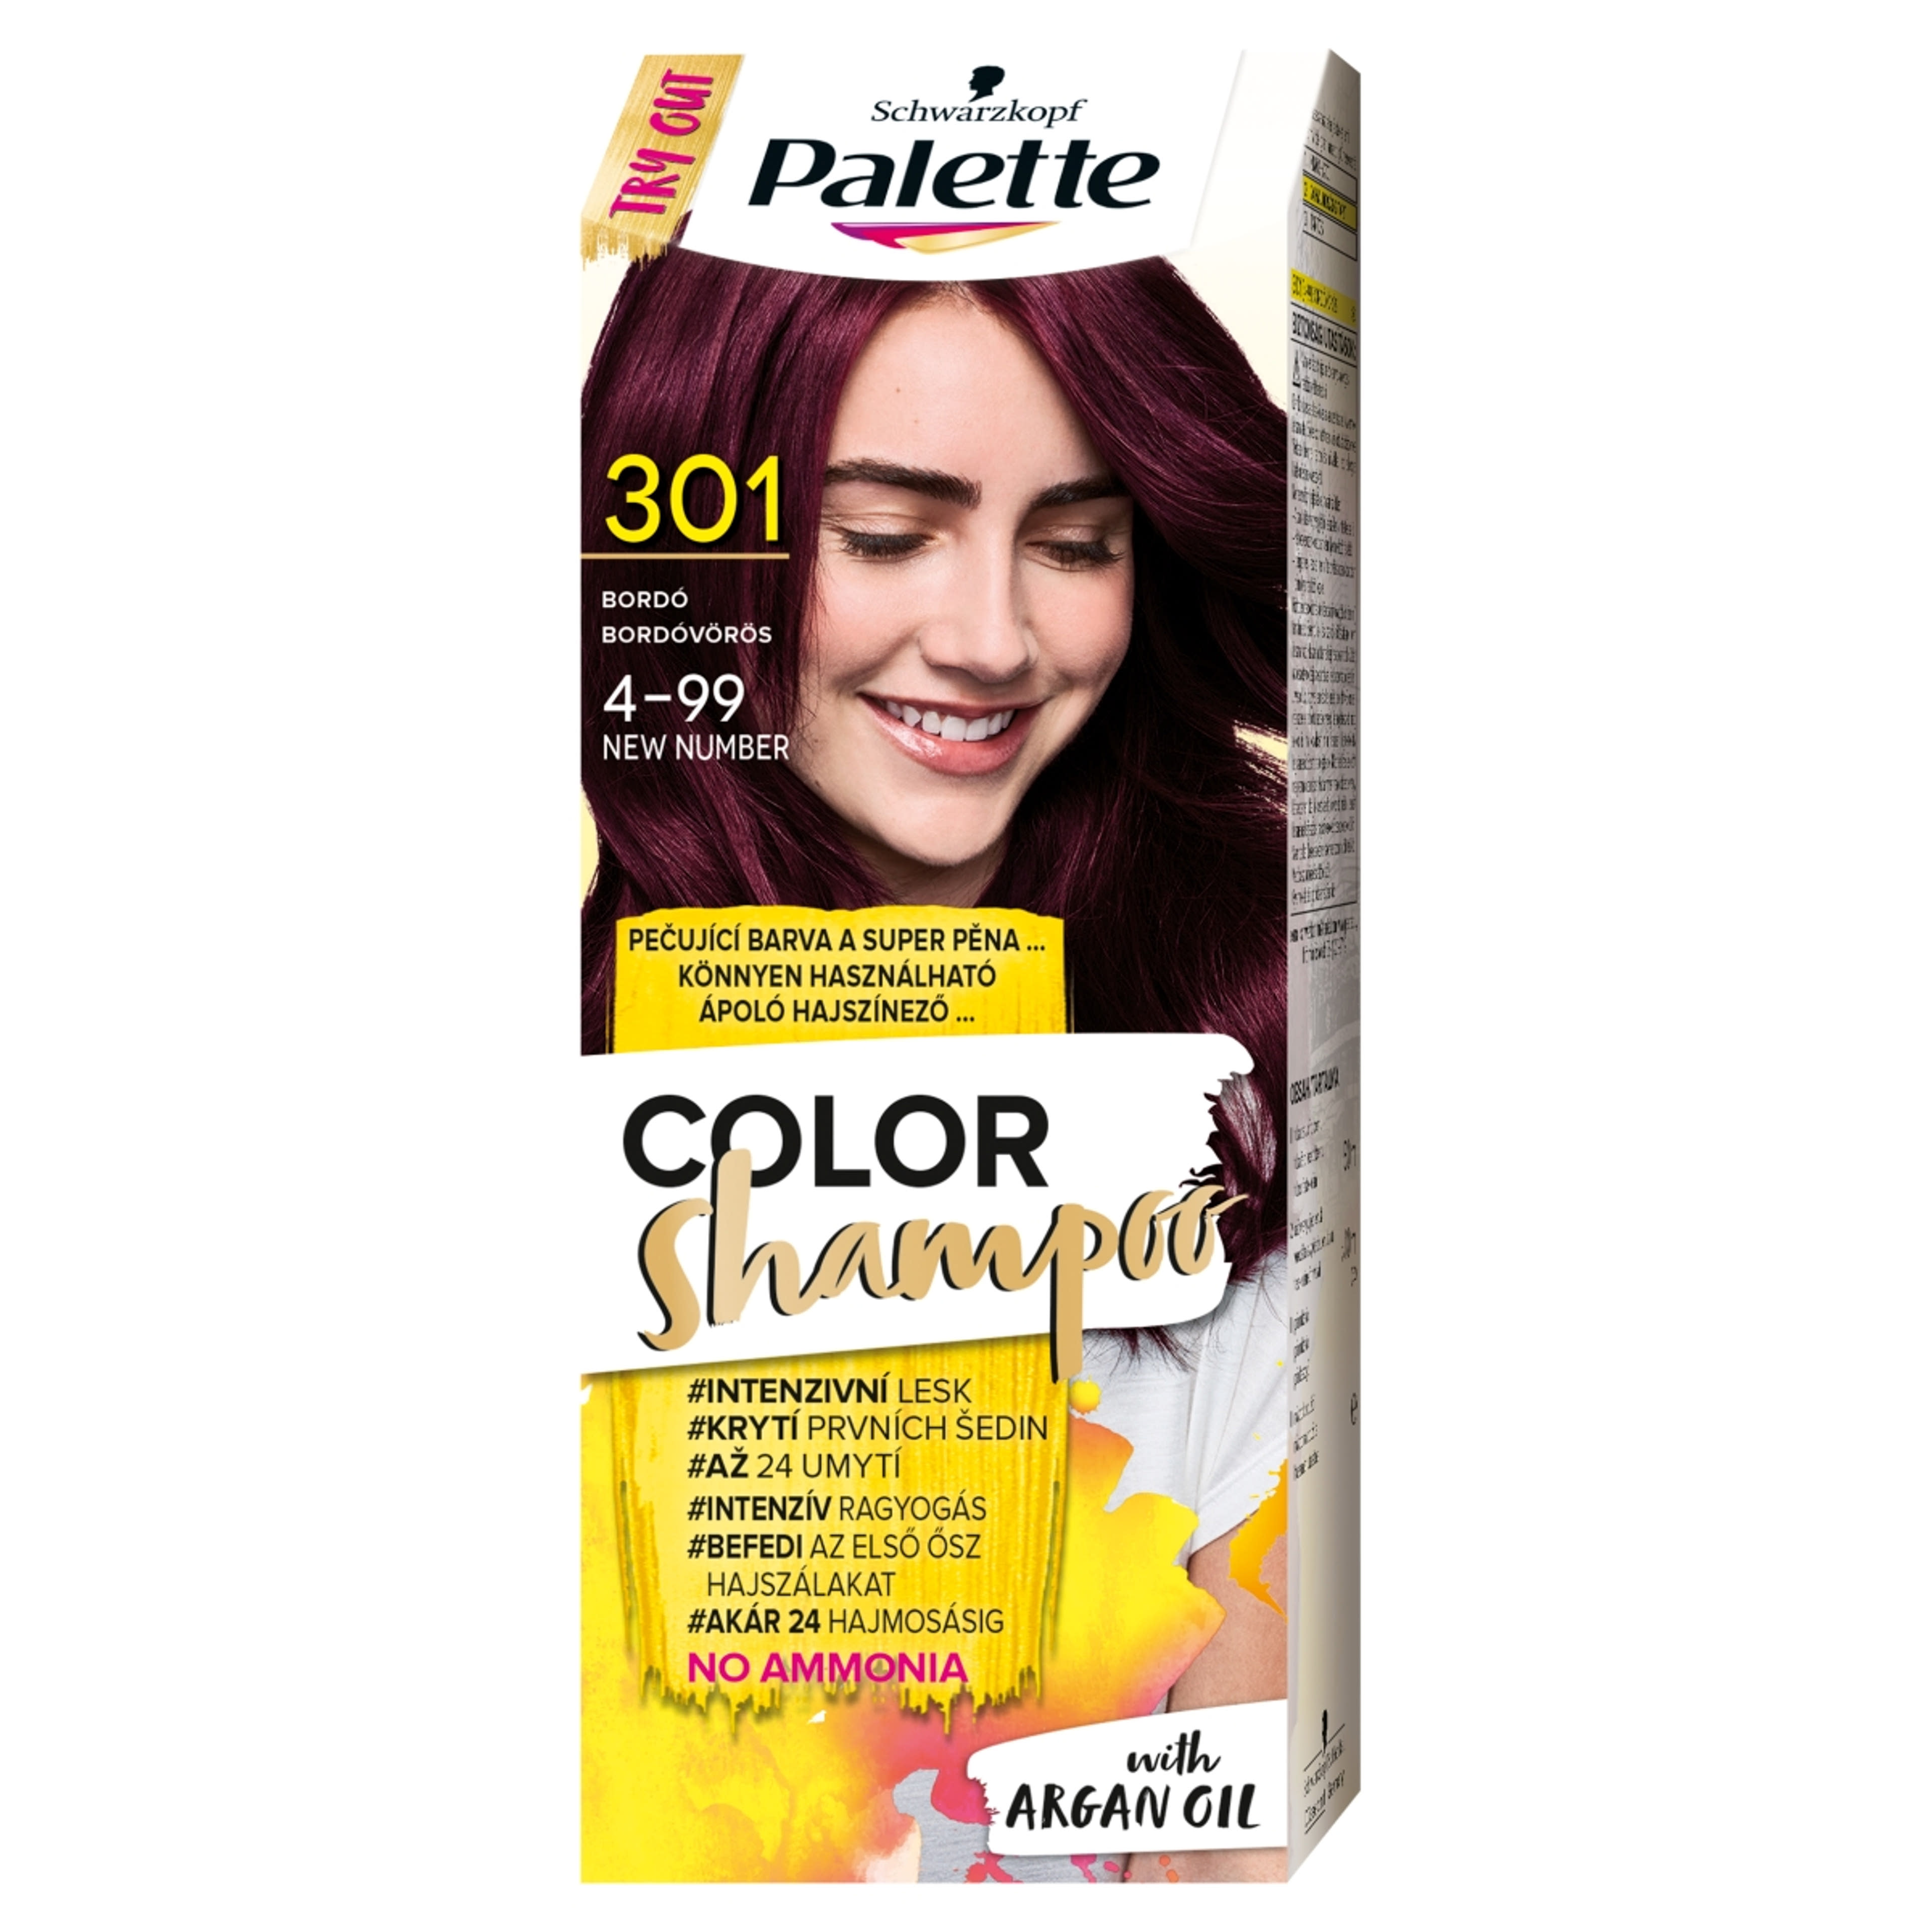 Schwarzkopf Palette Color Shampoo hajfesték 301 bordóvörös - 1 db-1